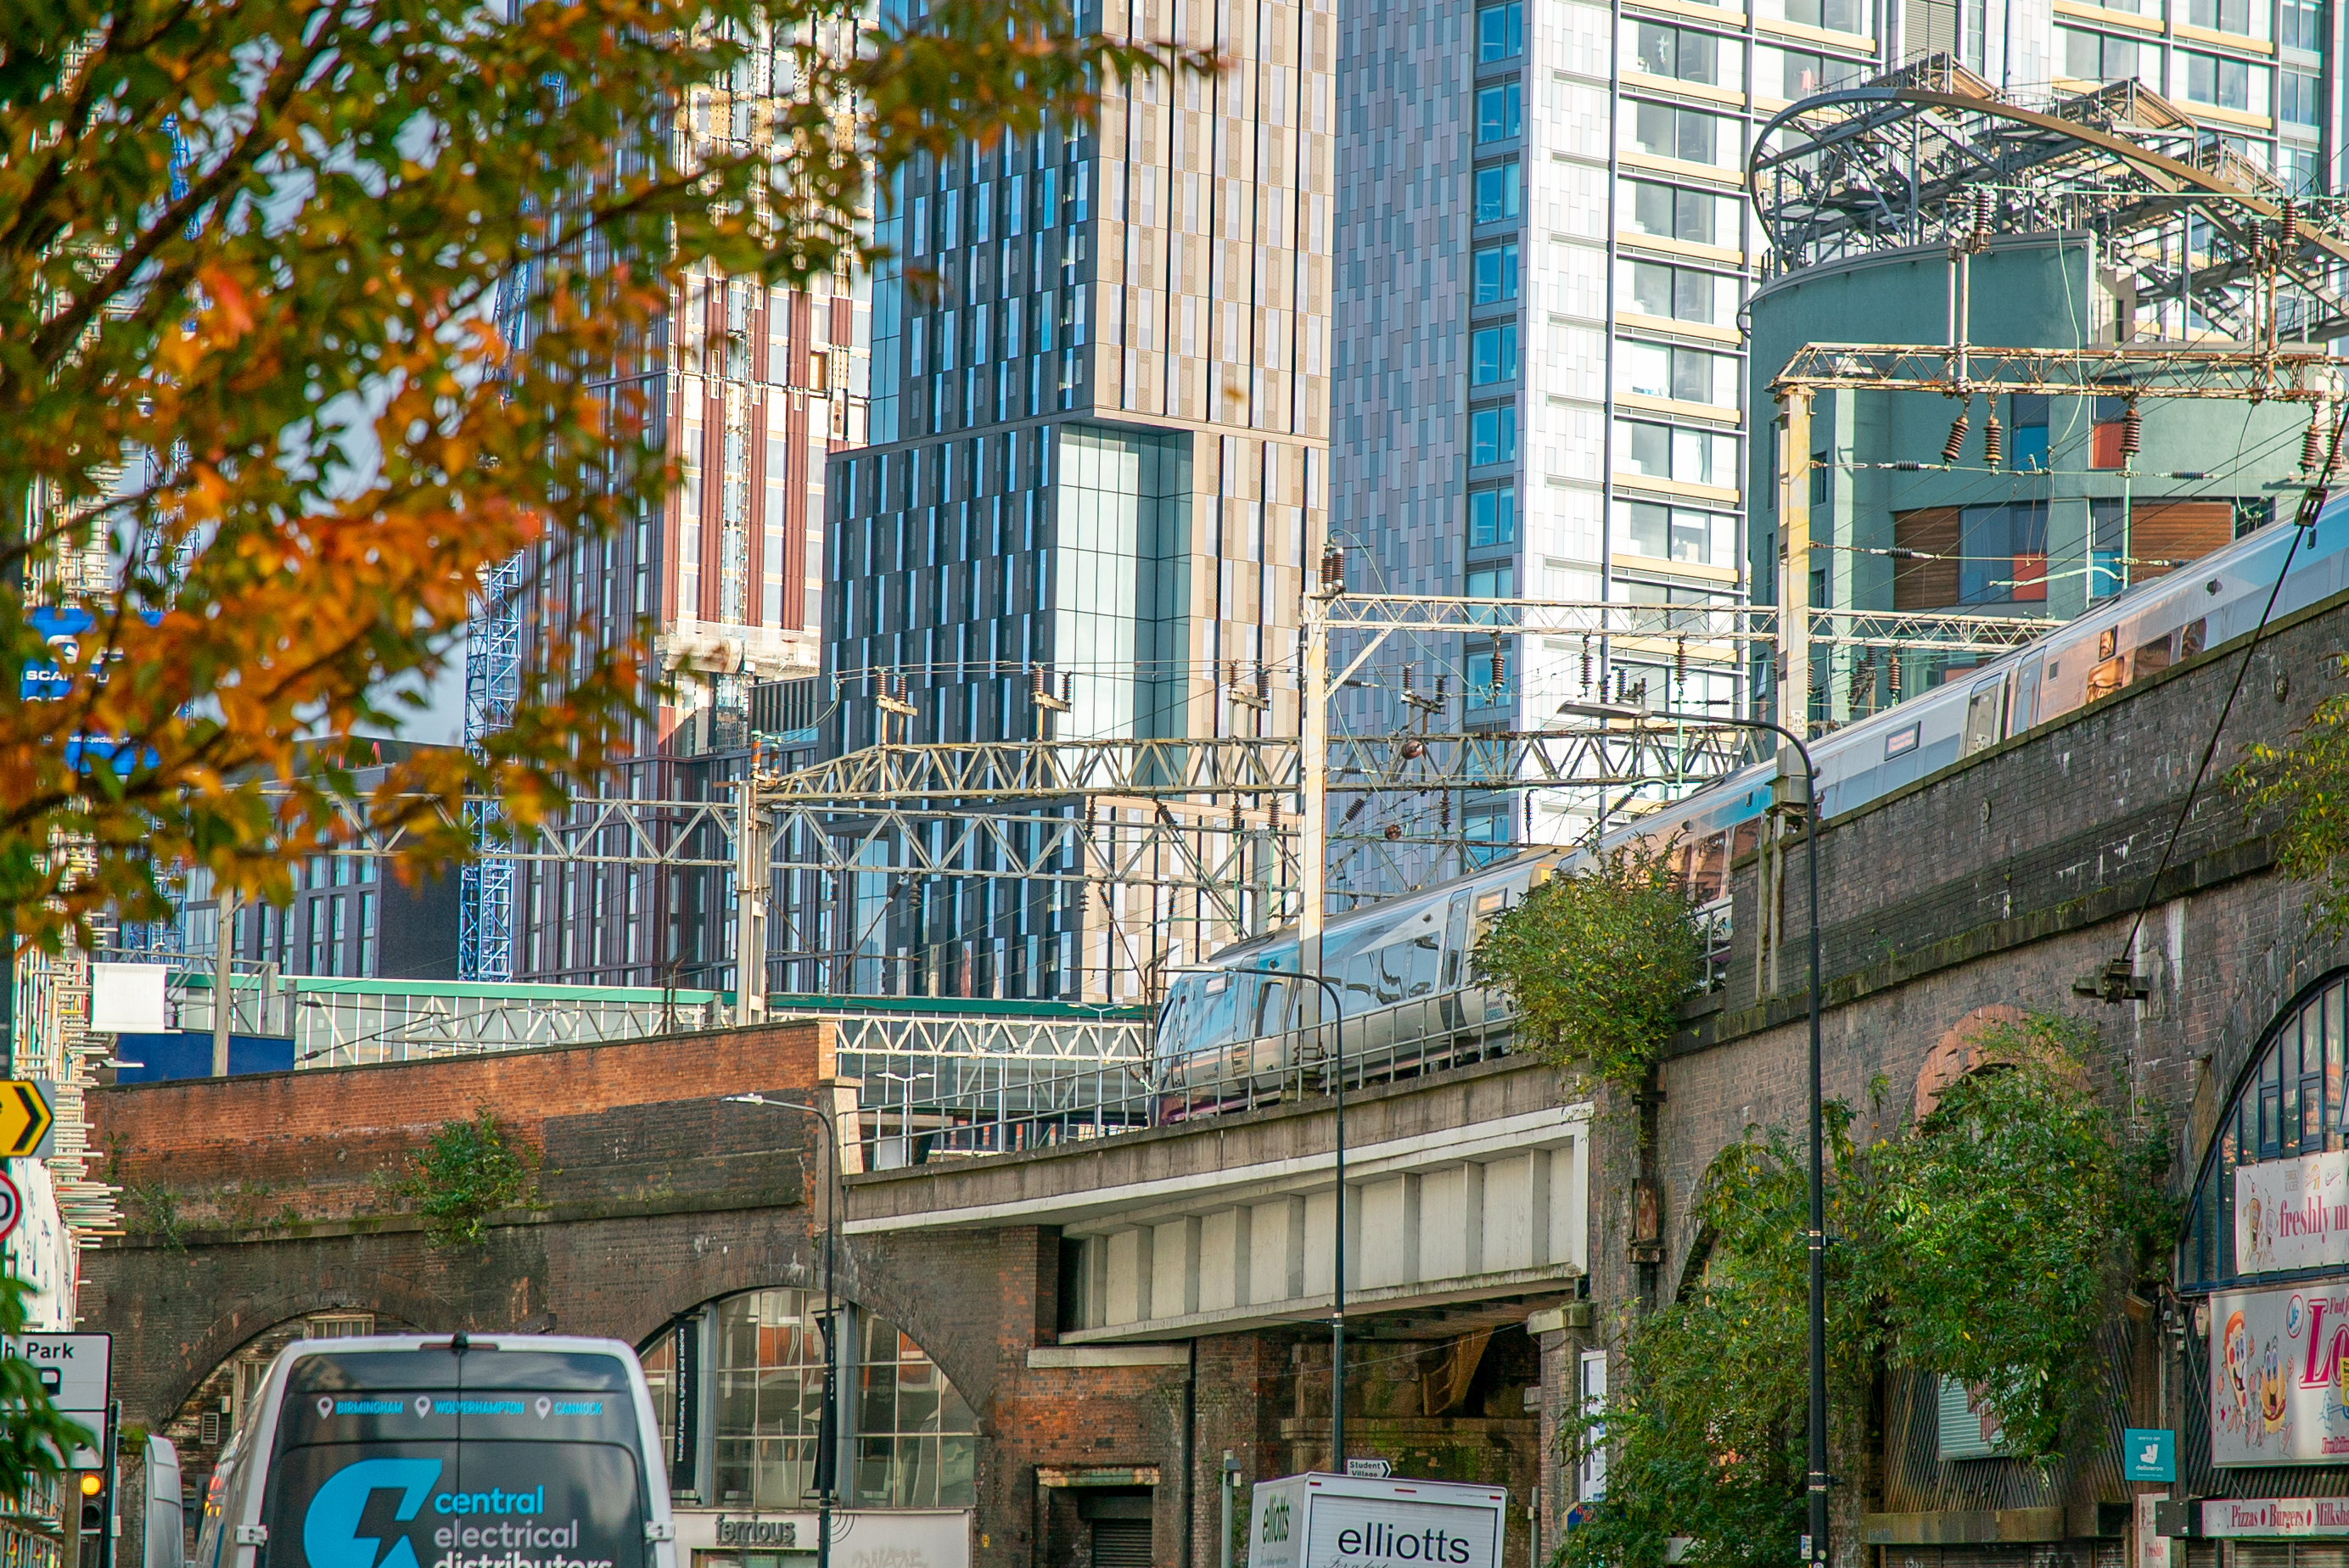 Overhead tram/train line in city